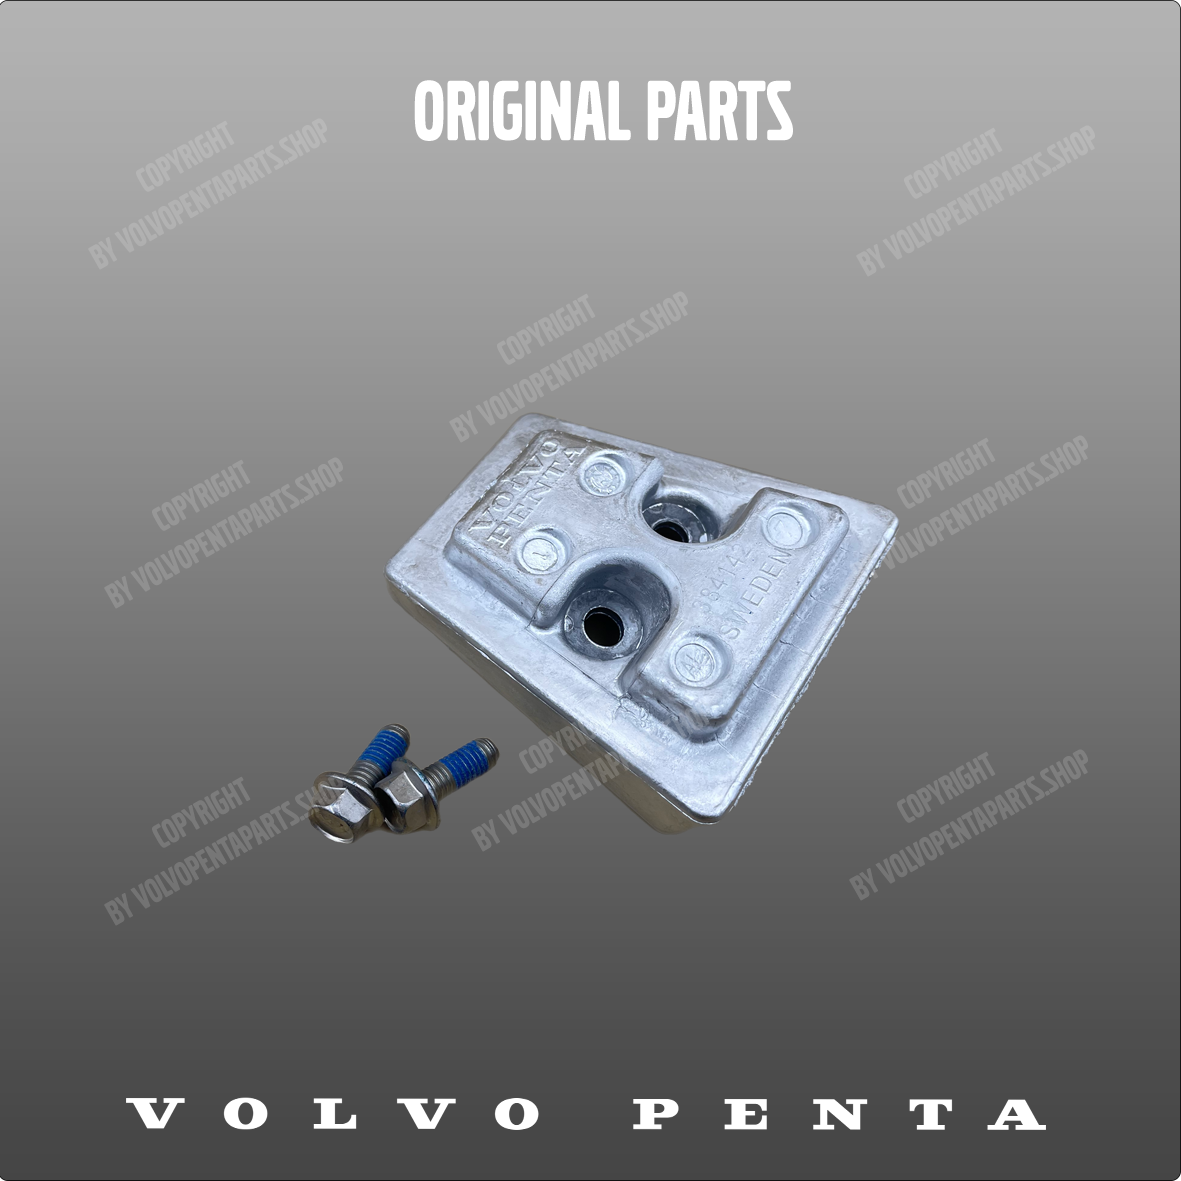 Volvo Penta anode kit 23164611